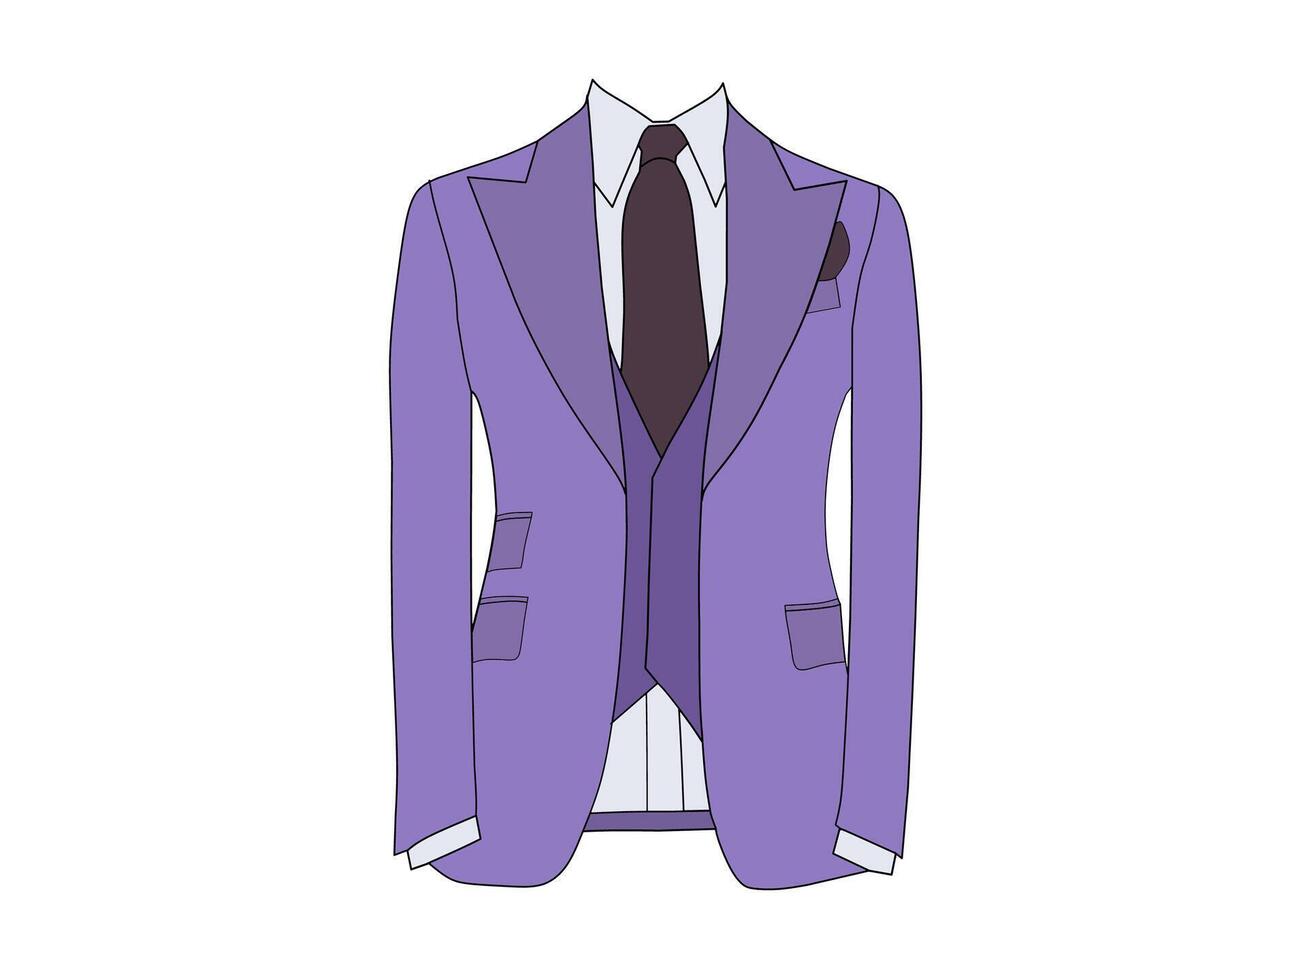 Men's Tuxedo suit vector with purple color and purple tie.